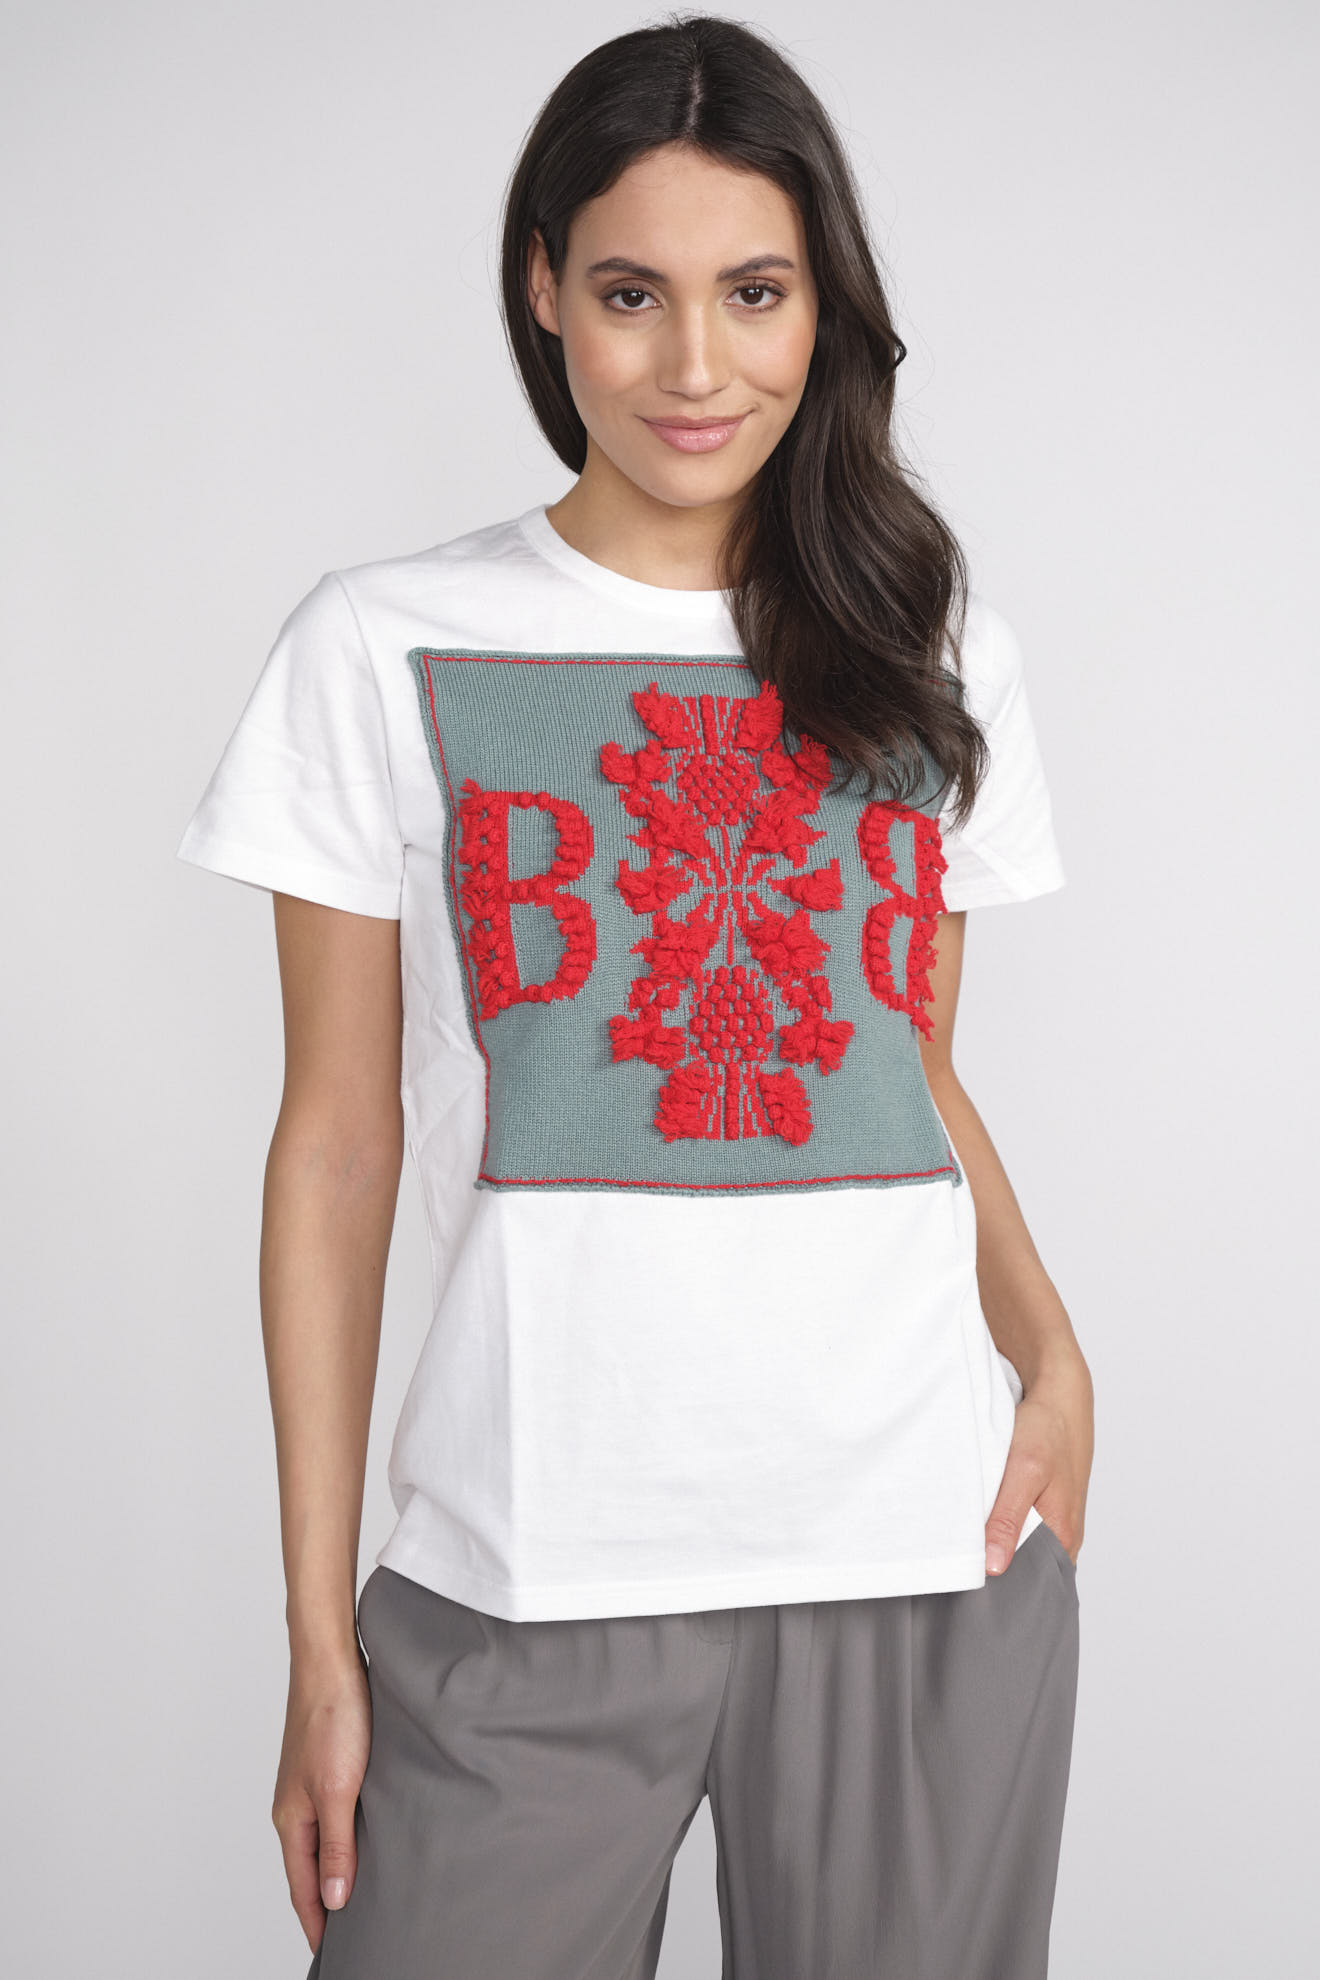 Barrie Cotton T-Shirt with logo cashmere patch – T-Shirt mit Logoaufnäher aus Cashmere braun M